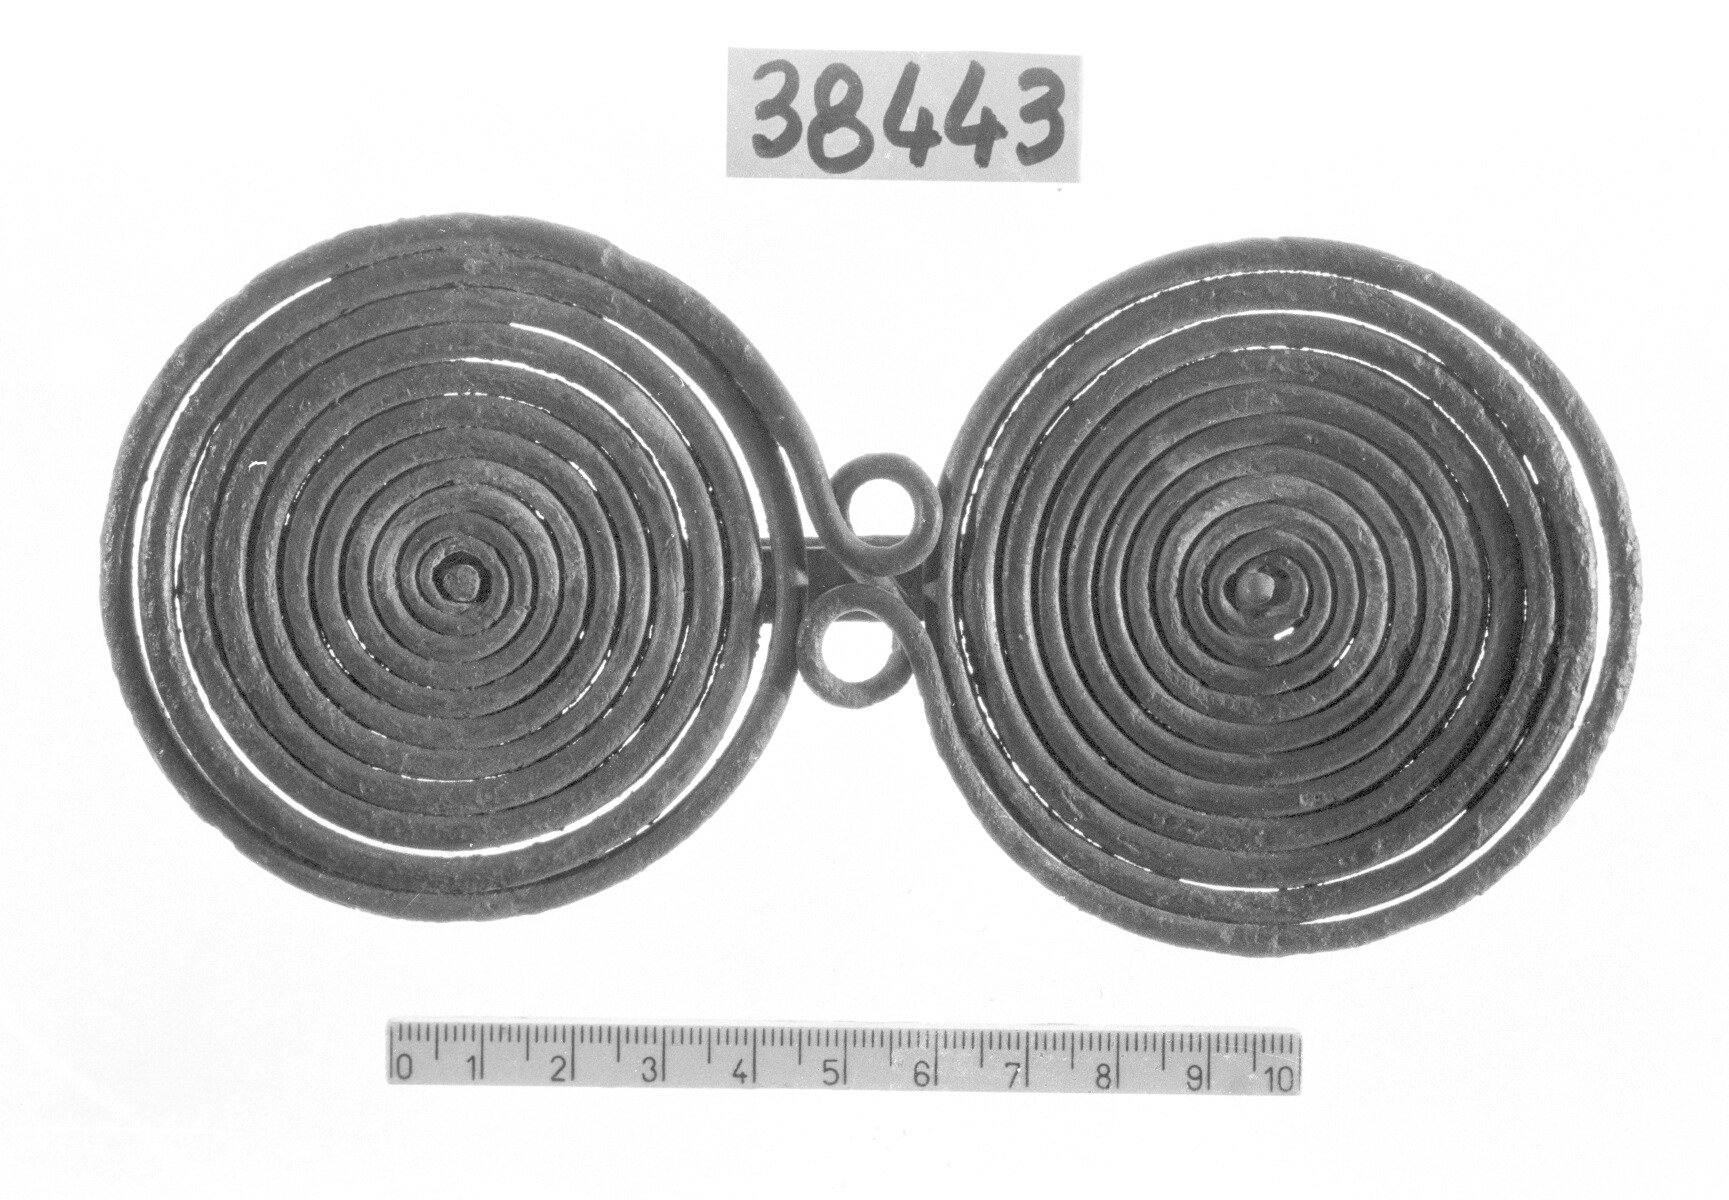 fibula ad occhioni - Piceno I-II (secc. IX-VIII a.C)